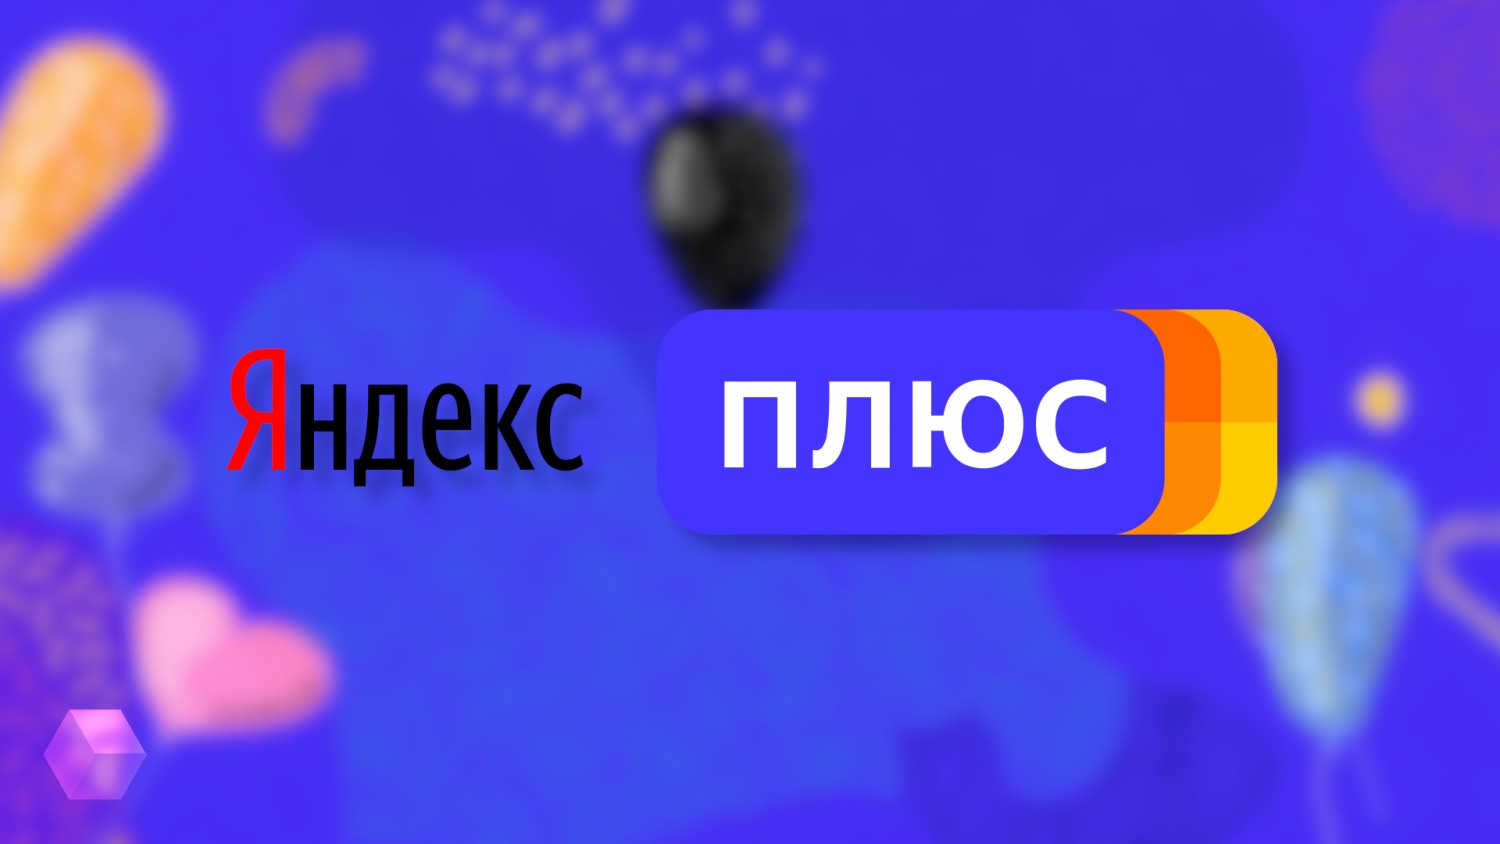 ⭐ Yandex.Plus⭐ (Kinopoisk HD, Yandex Music) - 90 days